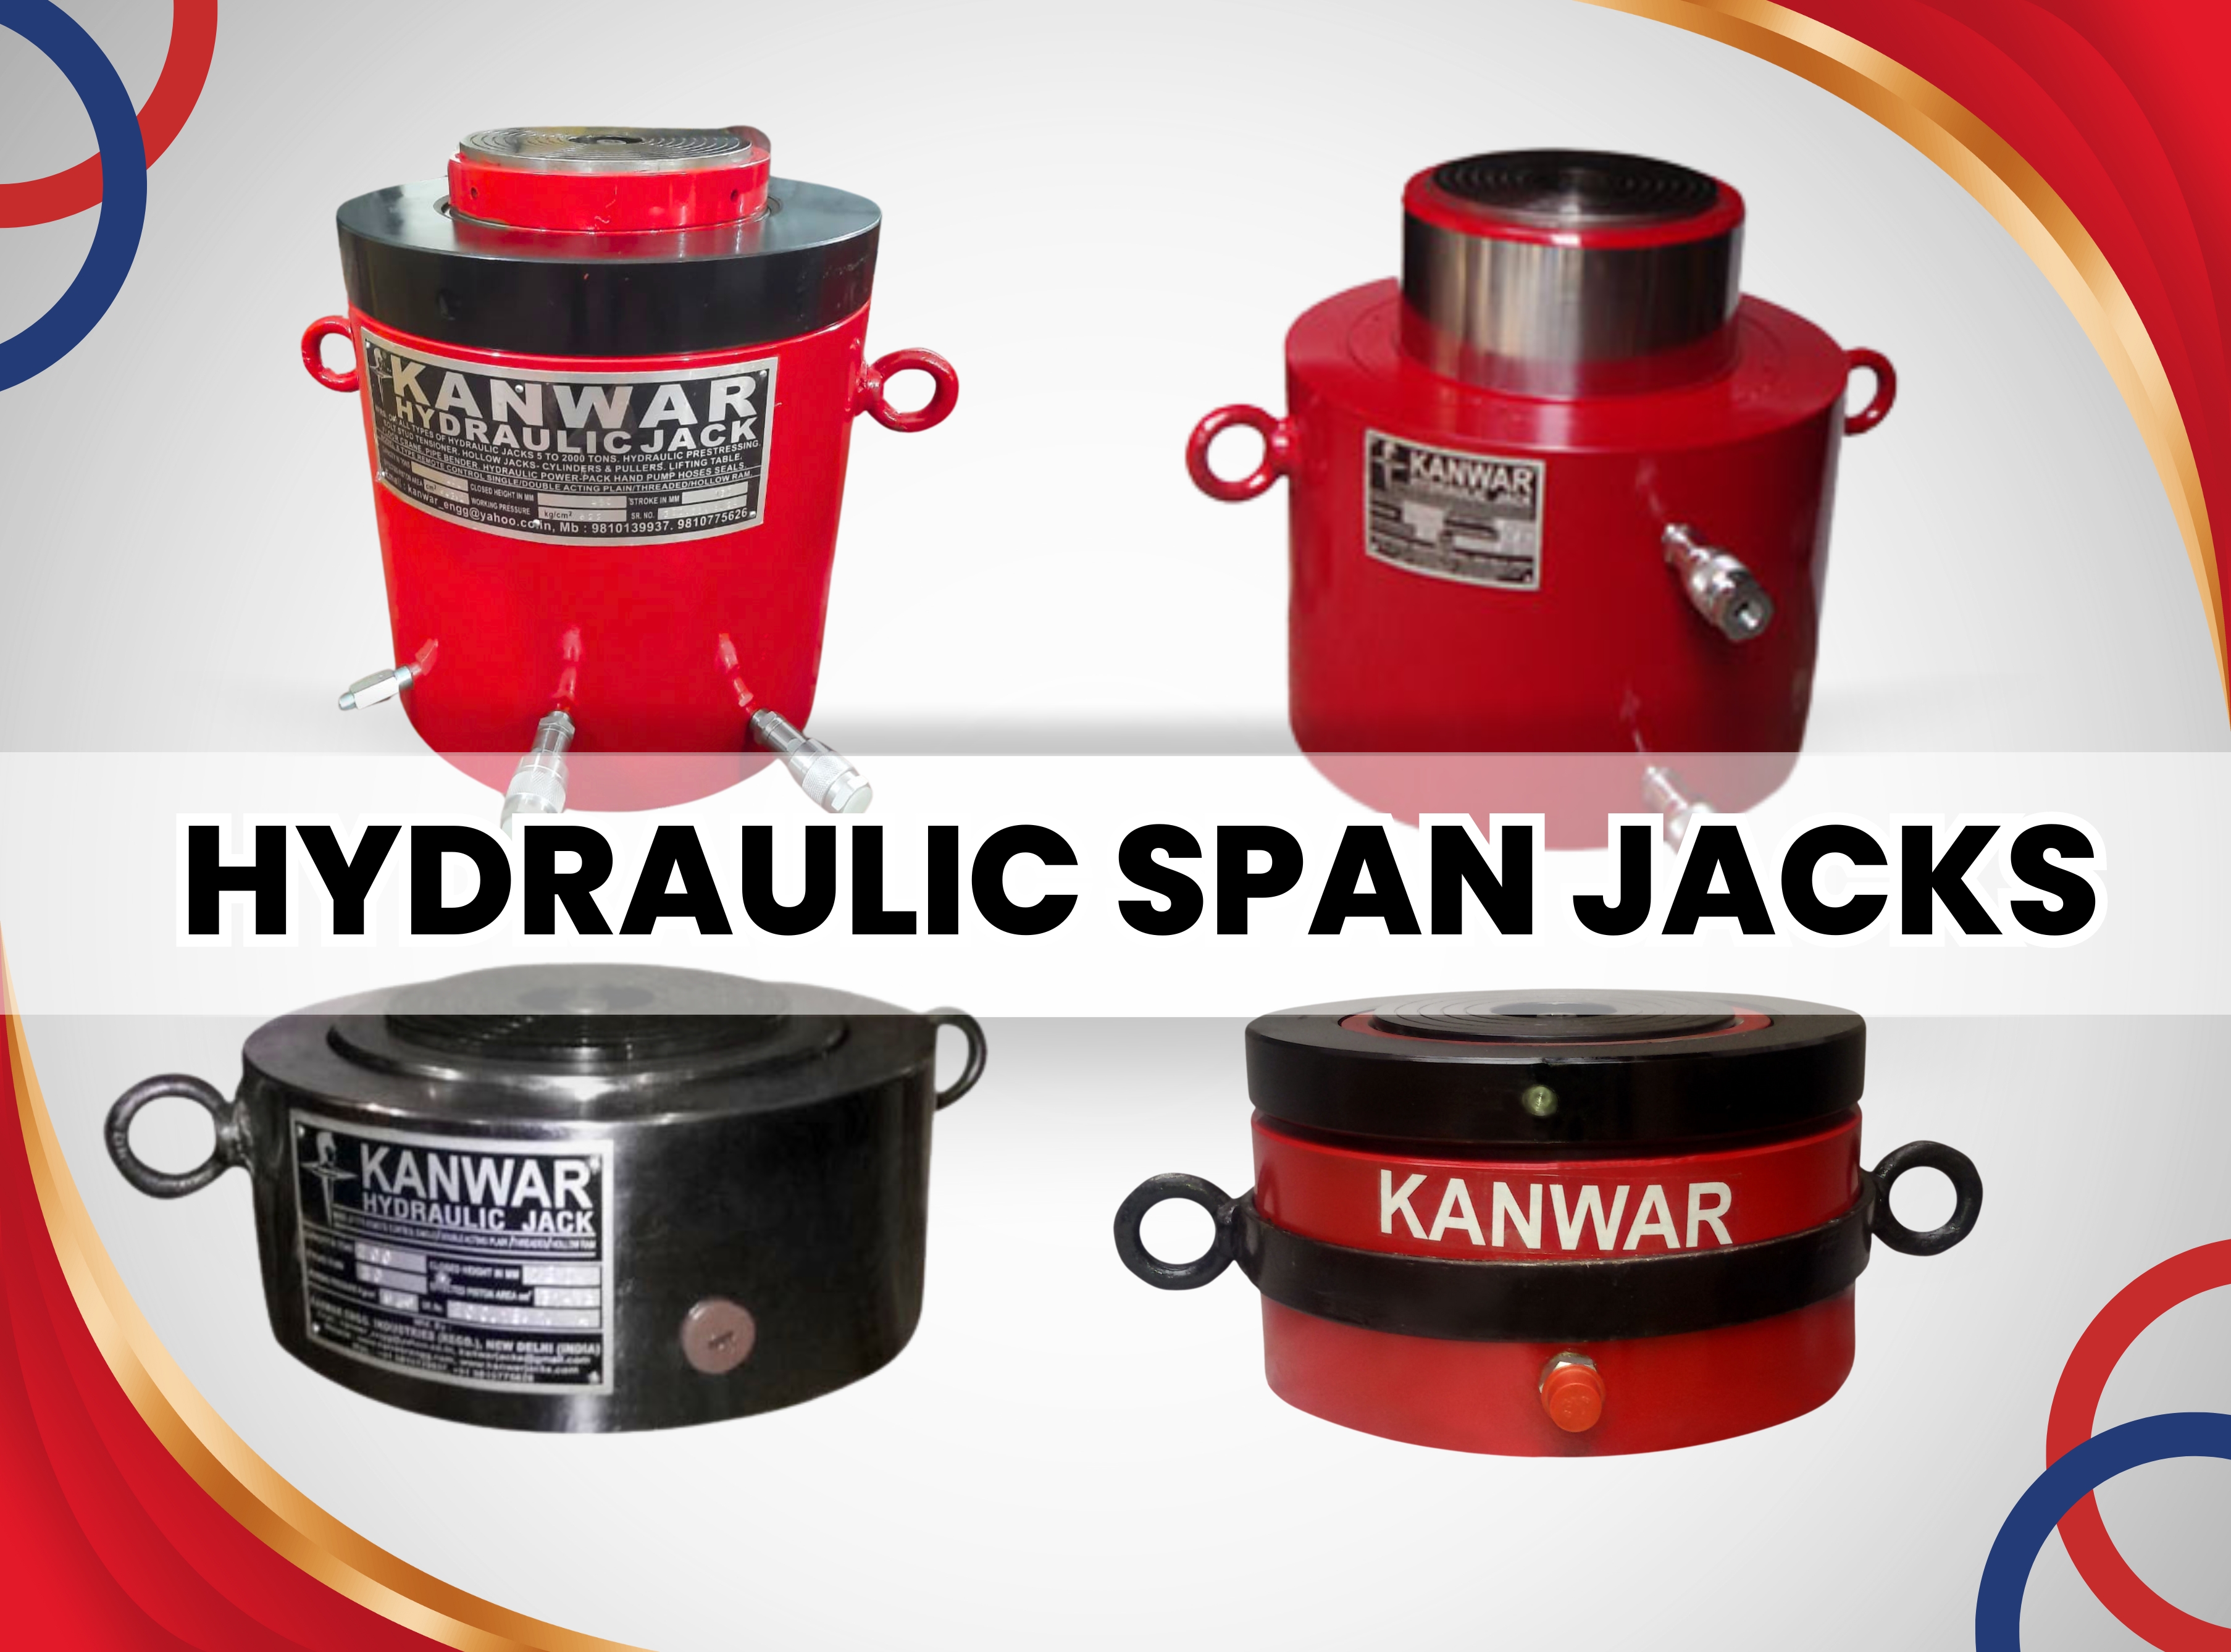 Hydraulic Span Jacks